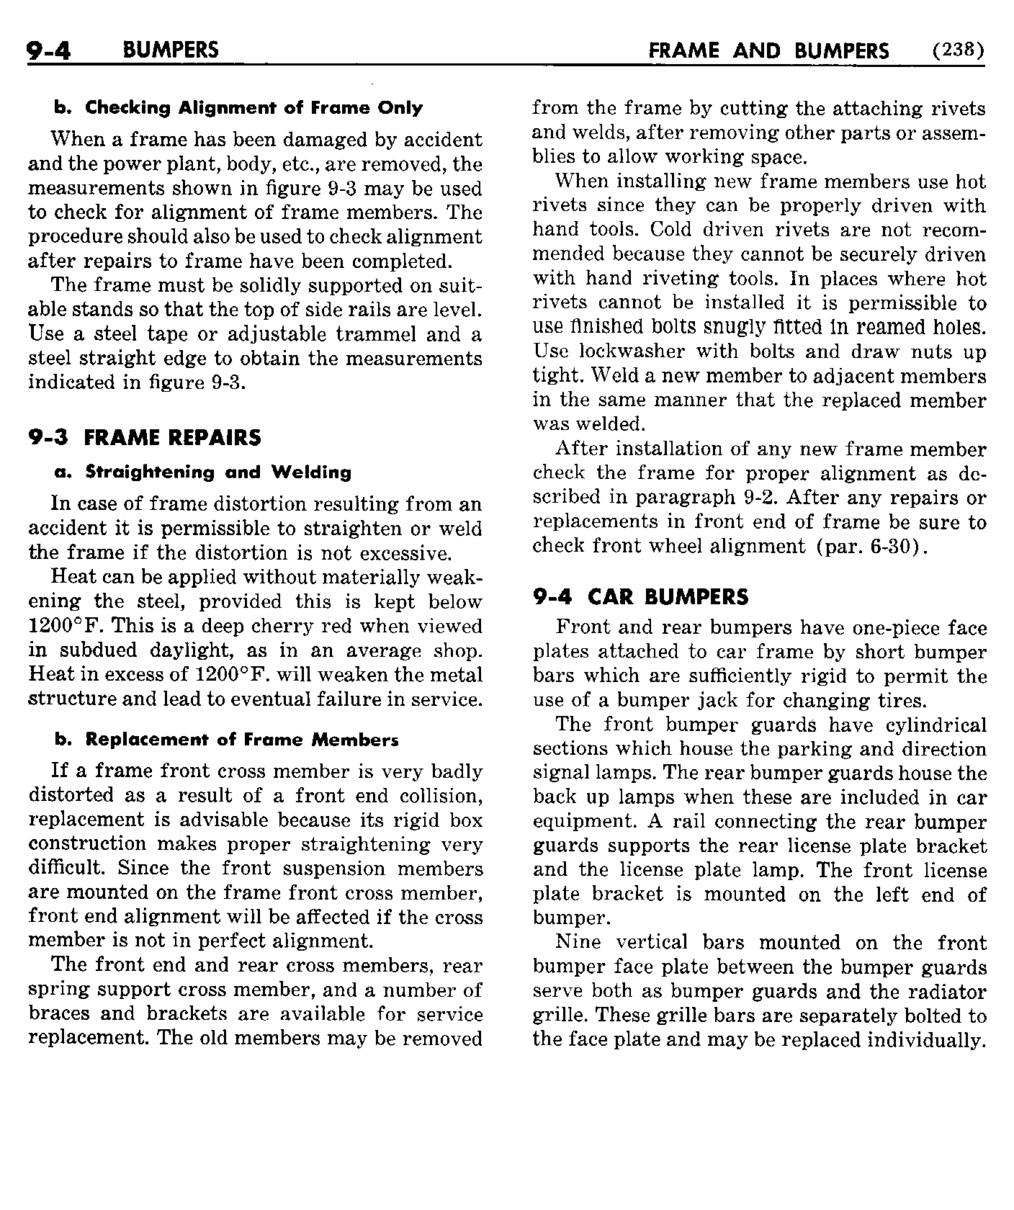 n_10 1950 Buick Shop Manual - Frame & Bumpers-004-004.jpg